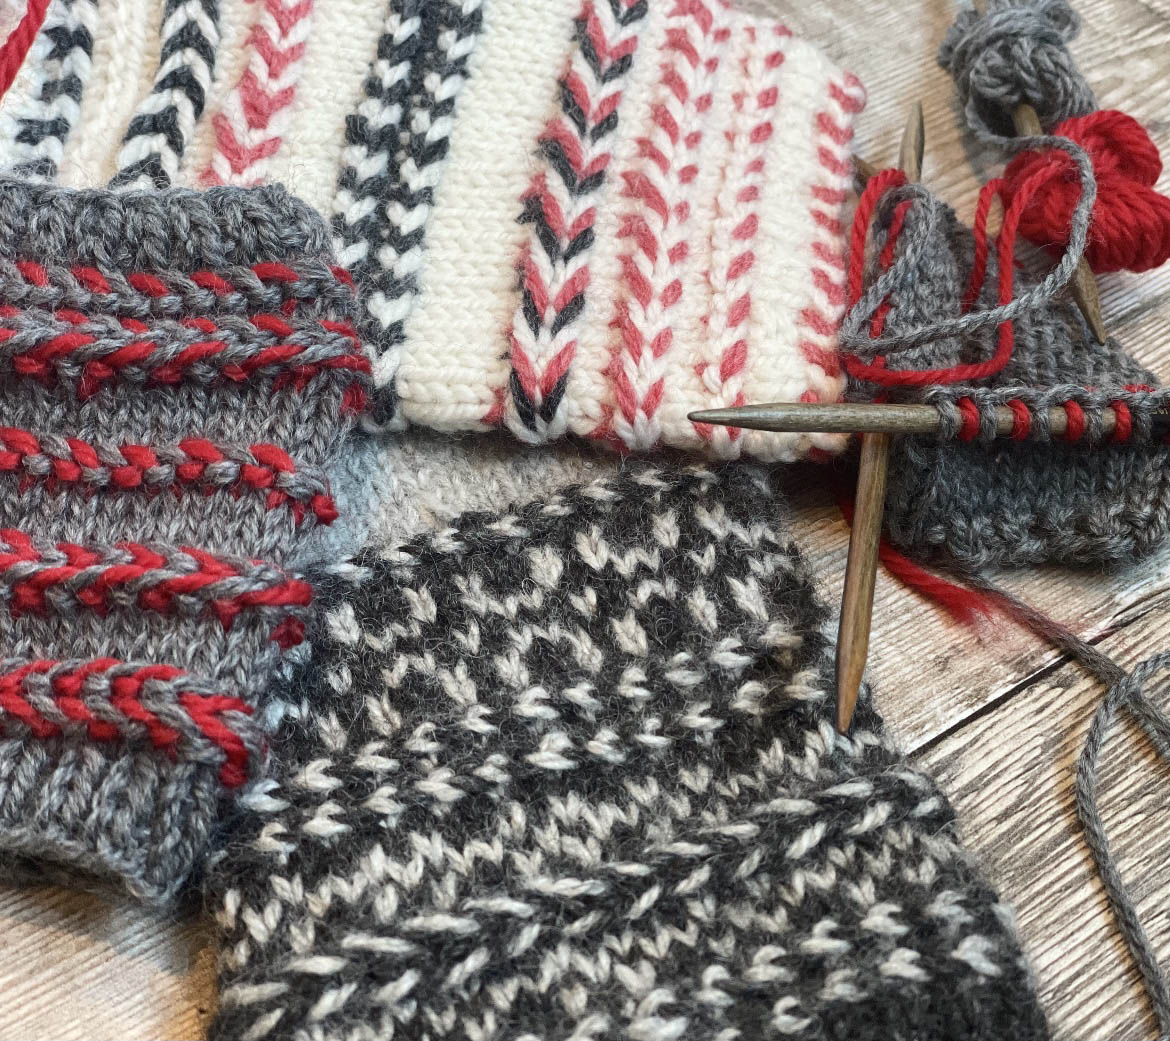 Lildog Blog: Lucet patterns  Lucet, Spool knitting, Card weaving